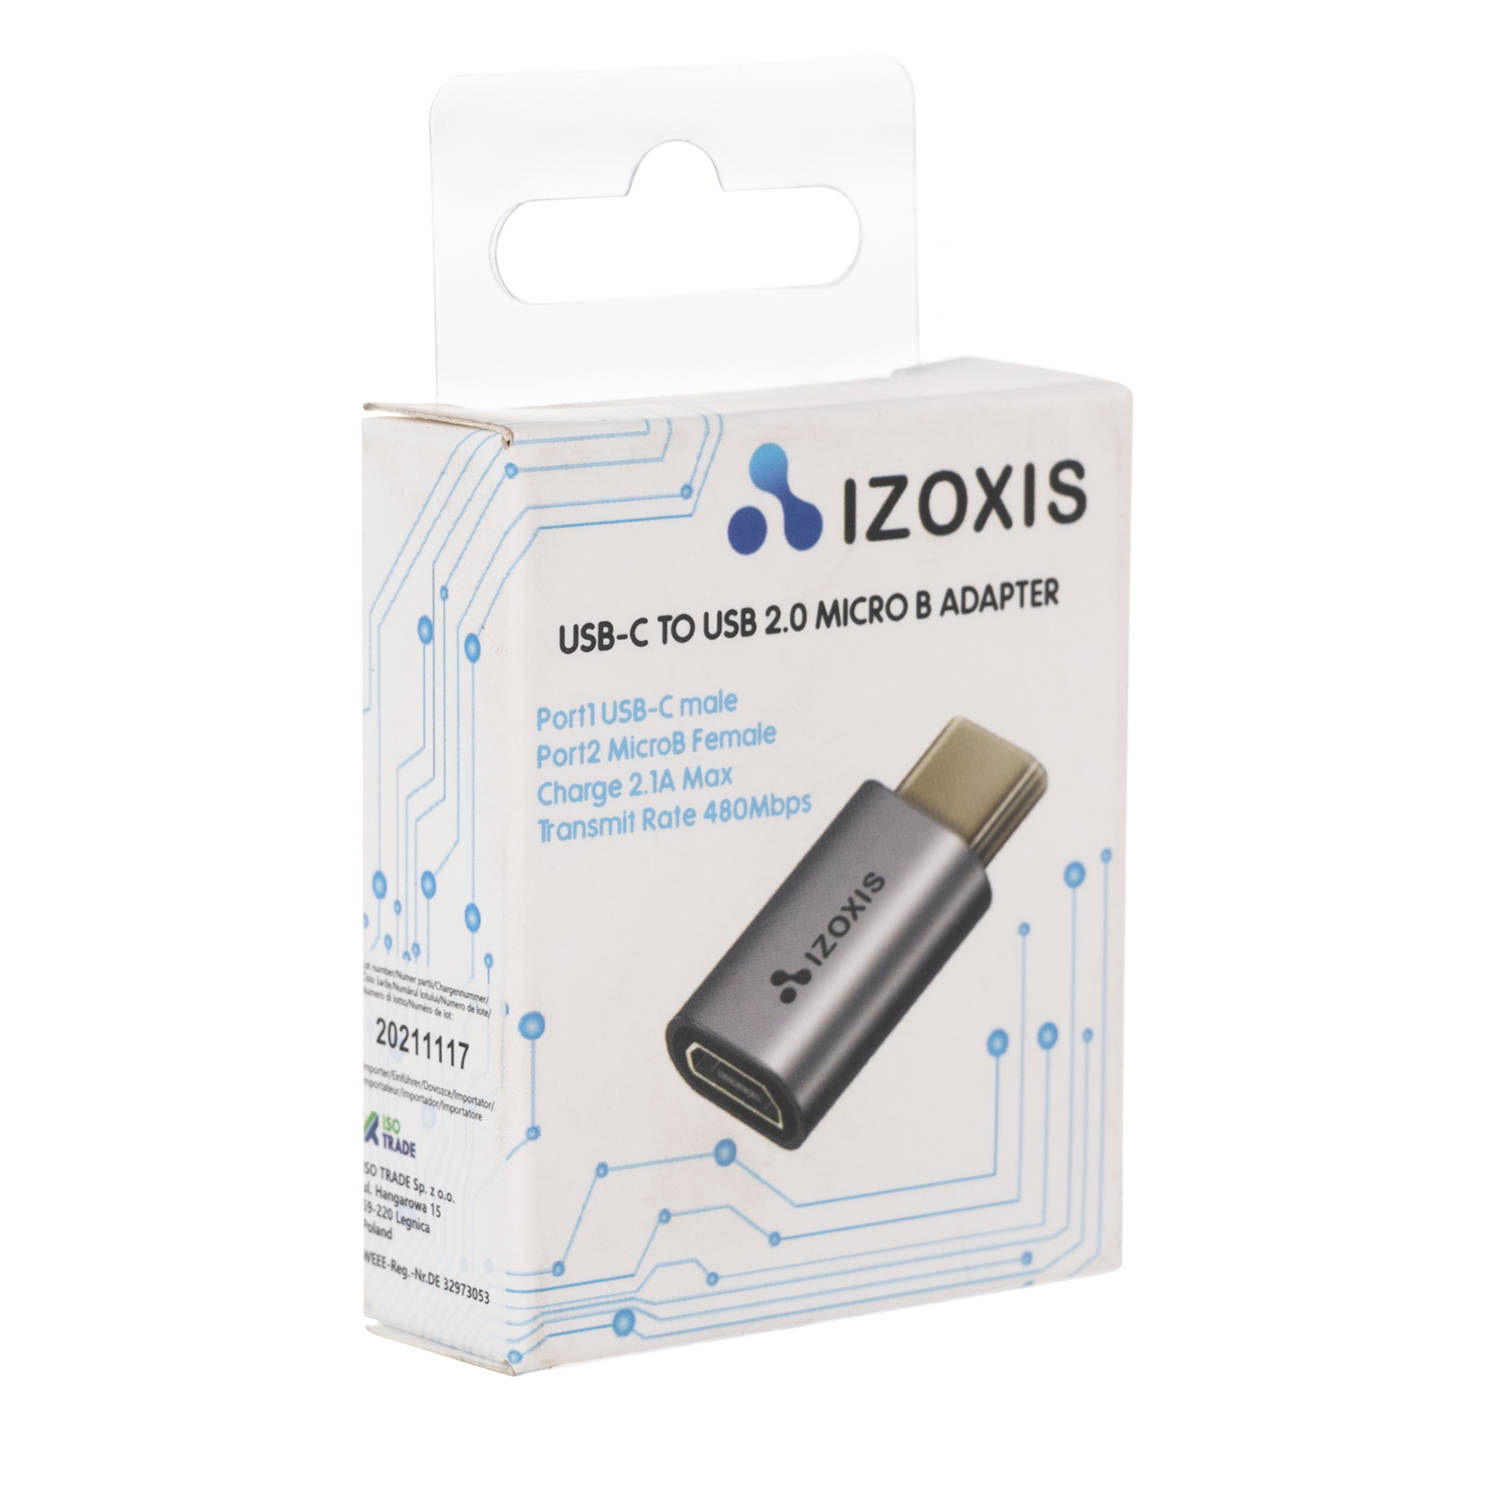 USB-C – USB micro B 2.0 adapter (10)